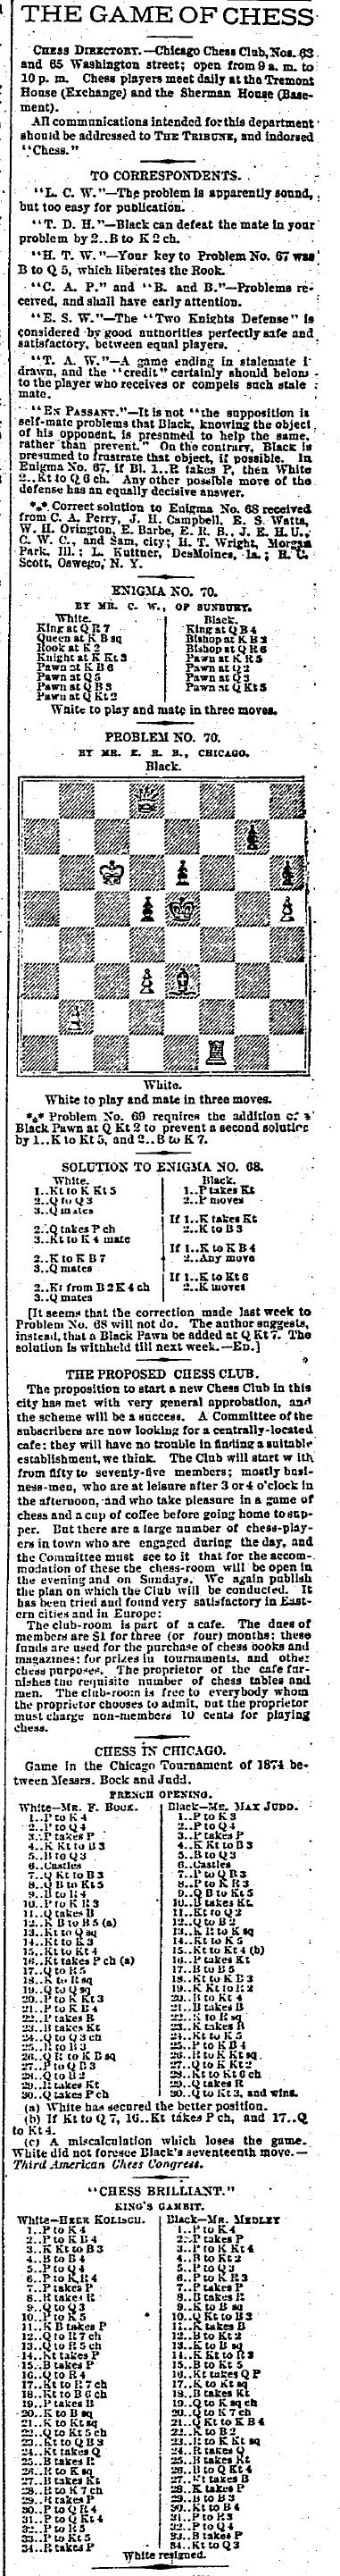 1877.04.01-01 Chicago Tribune.jpg